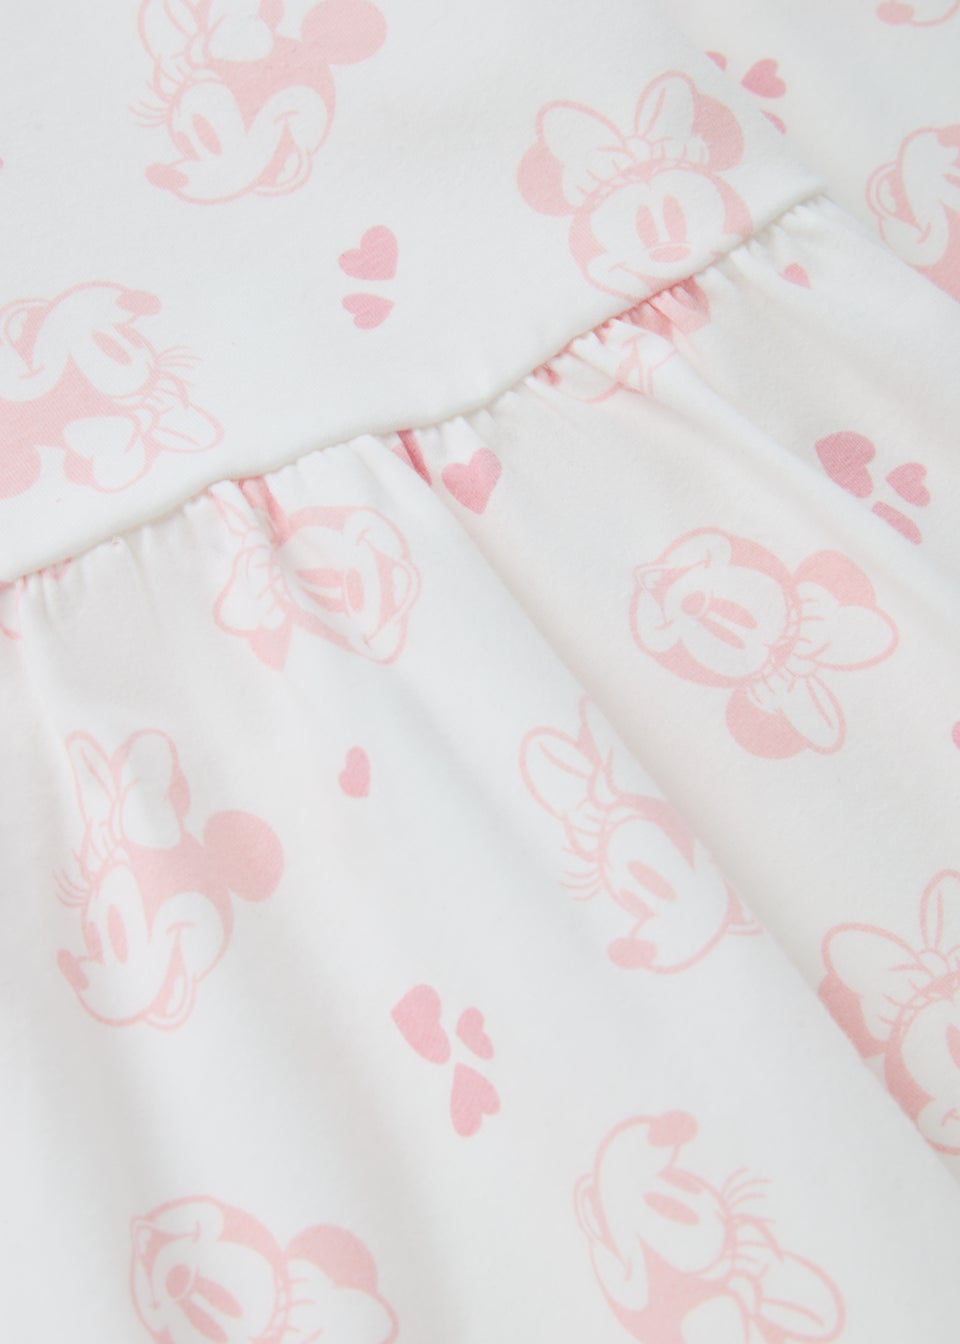 Baby Cream Minnie Mouse Print Dress (Newborn-12mths)